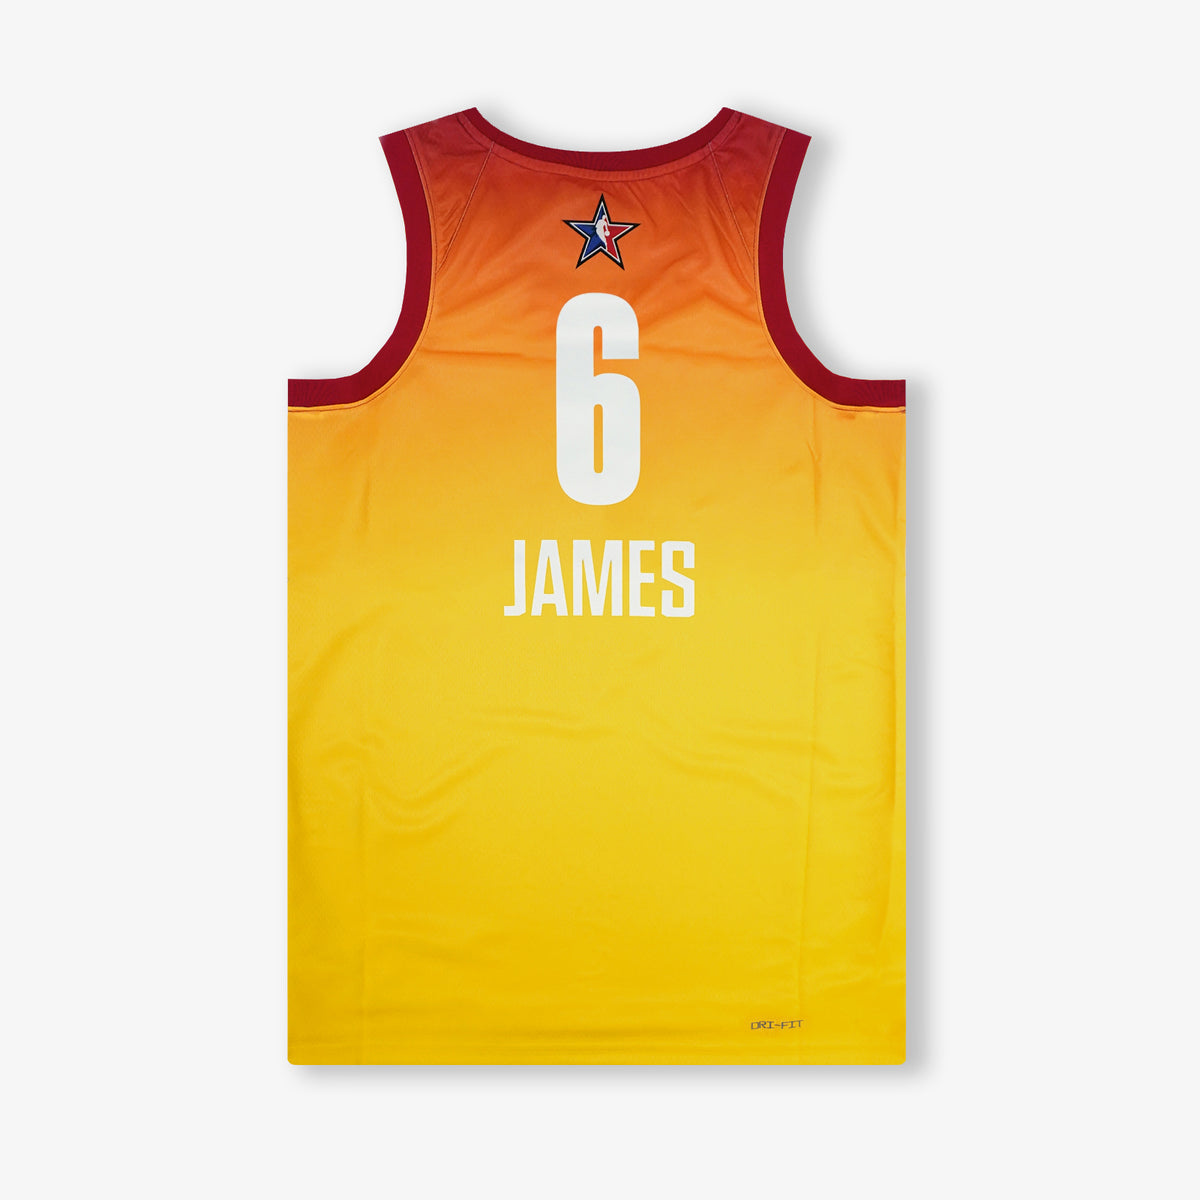 Nike Jordan Giannis Antetokounmpo 2020 All-Star Red Swingman Jersey Size M  (44)